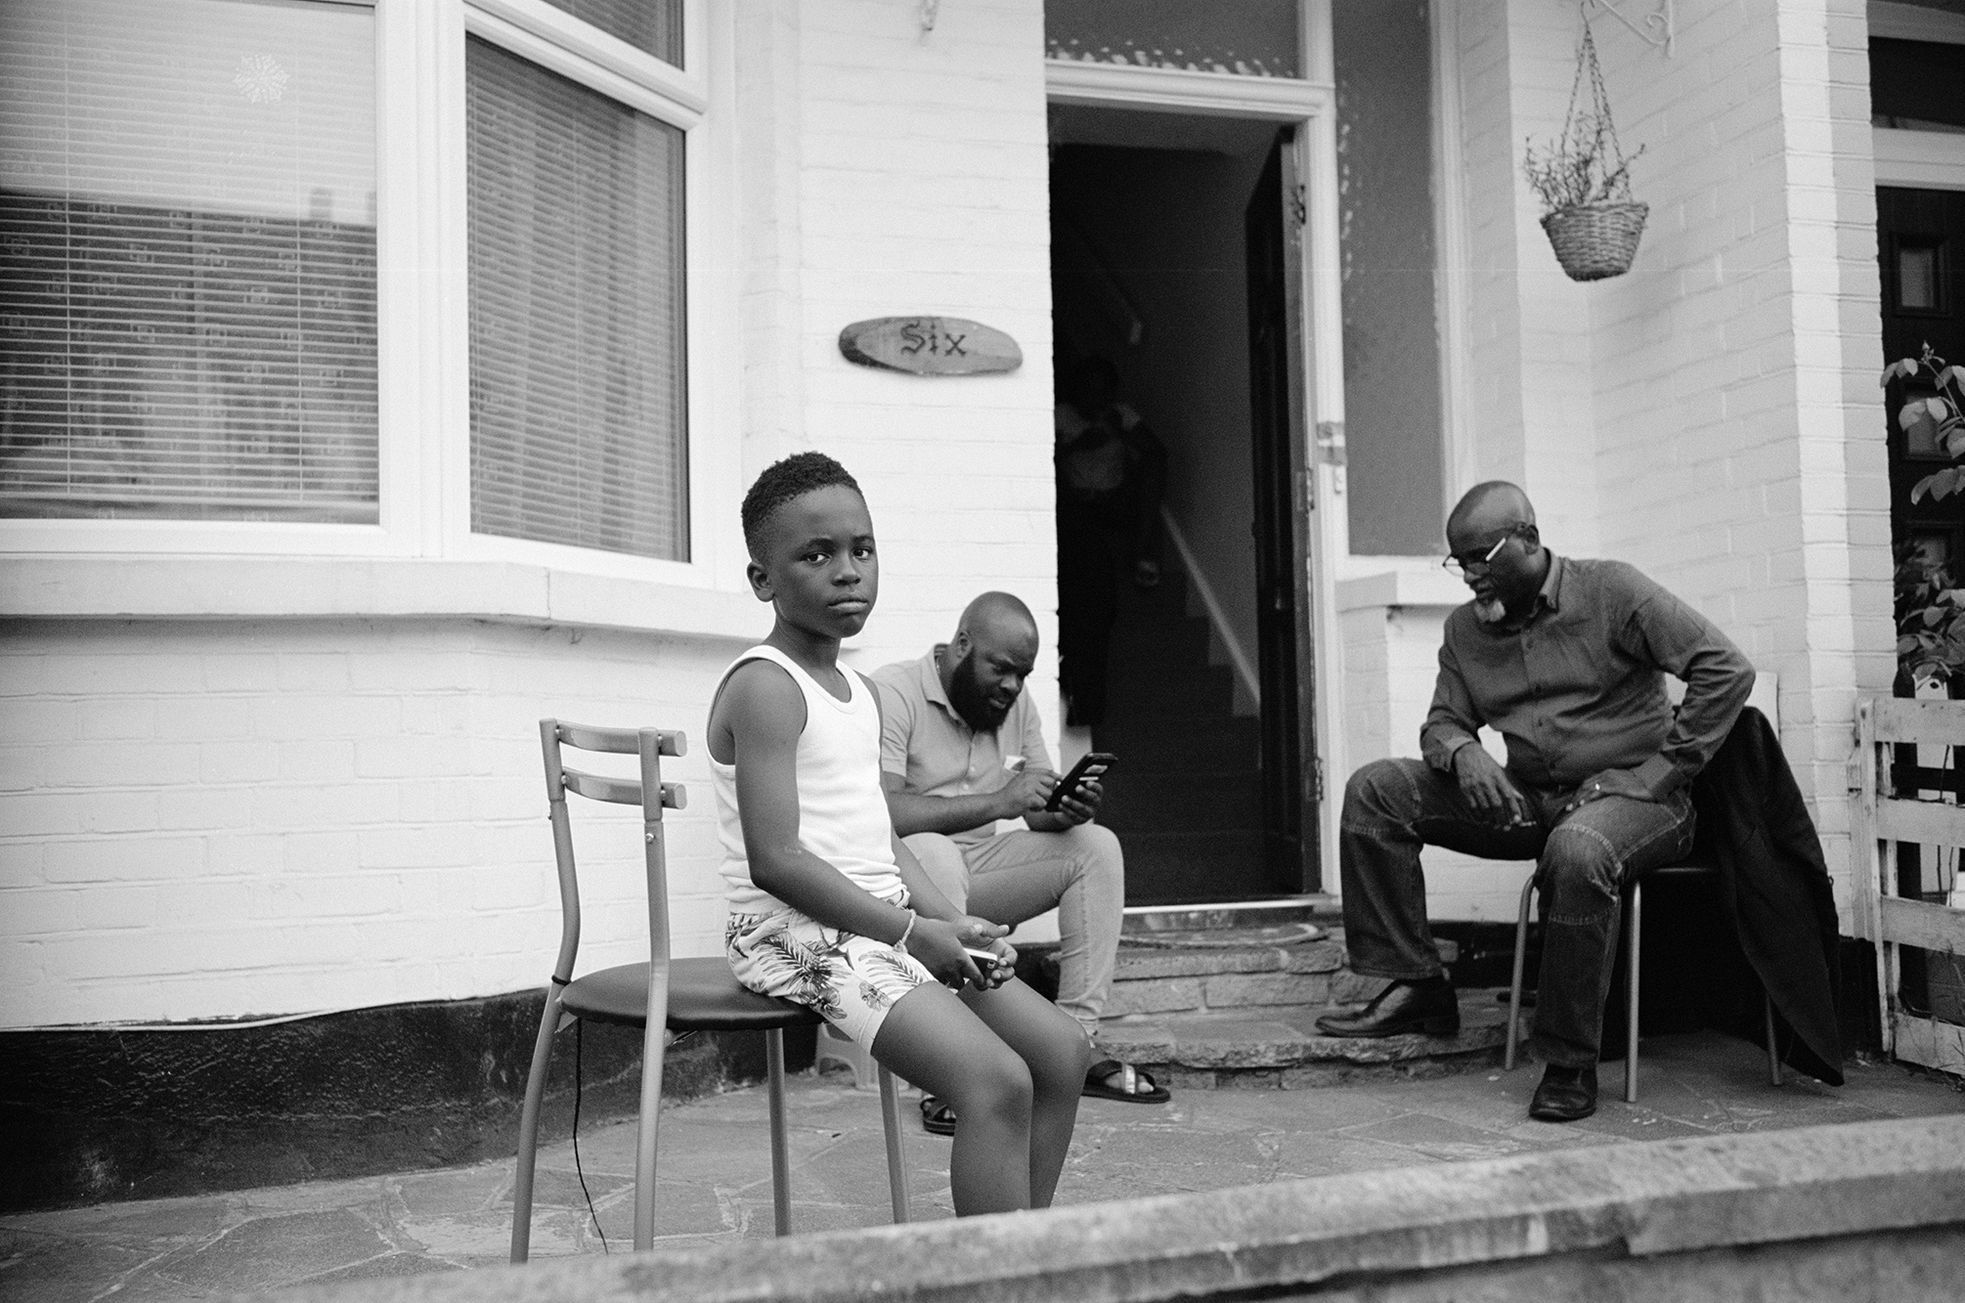 1854 x Leica Witnesses of: The Everyday © Renee Osubu 2021